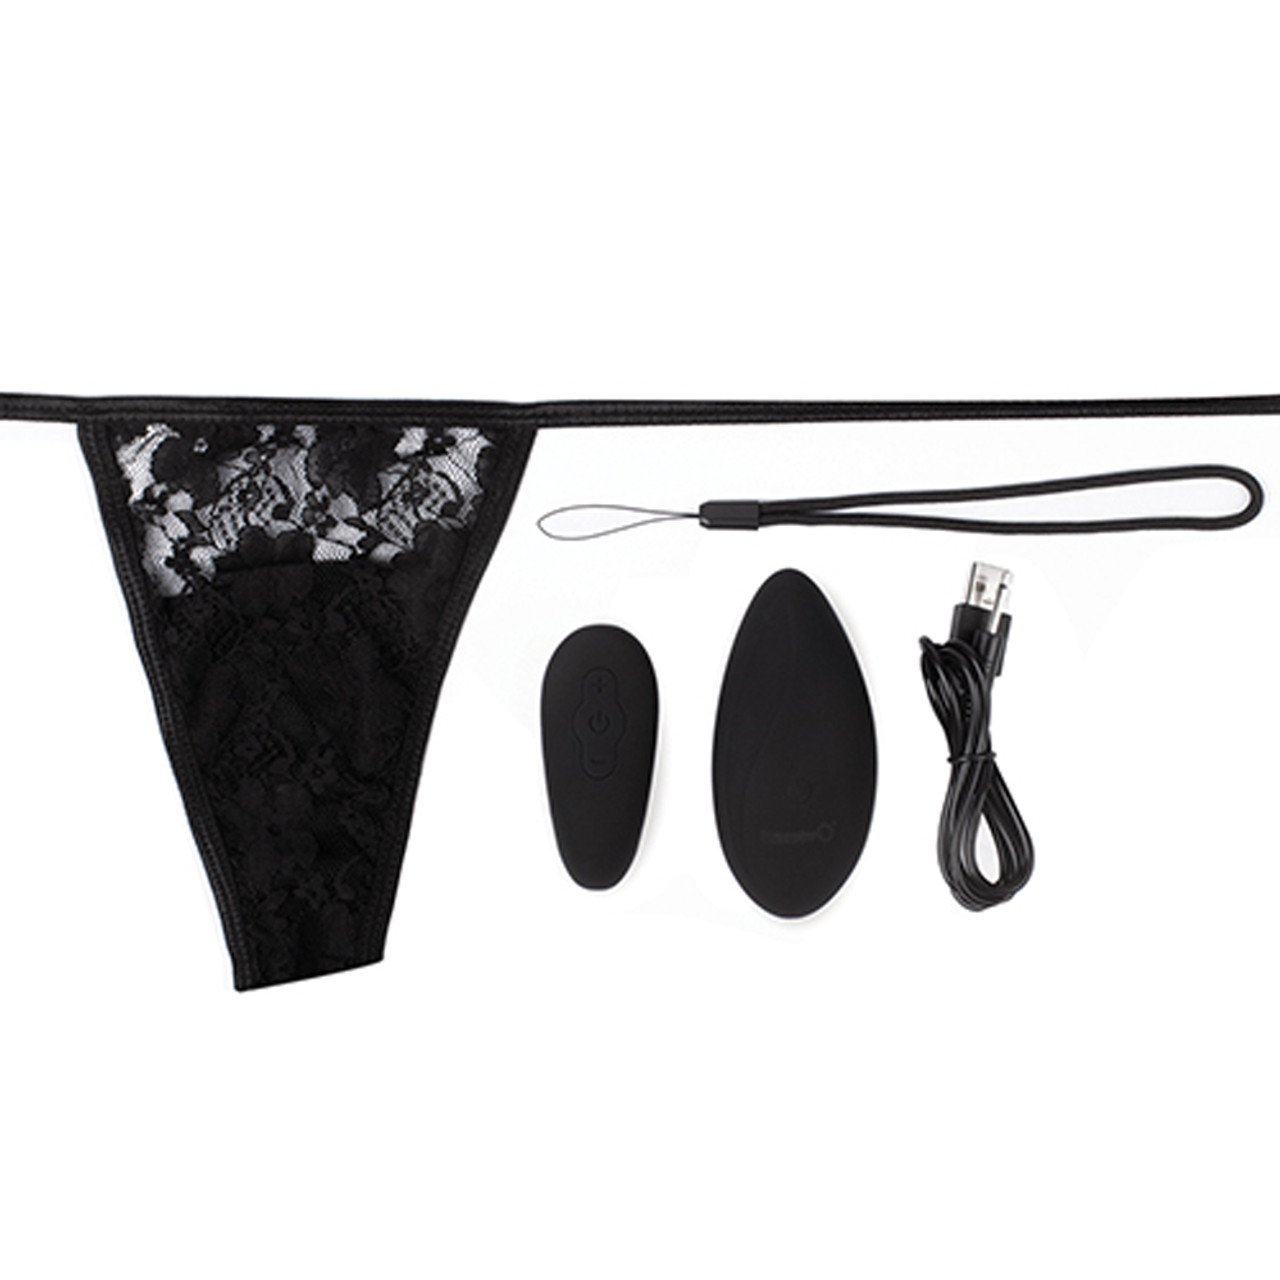 Buy the My Secret Premium Ergonomic 10-function Remote Control Vibrating Panty Set in Black pic